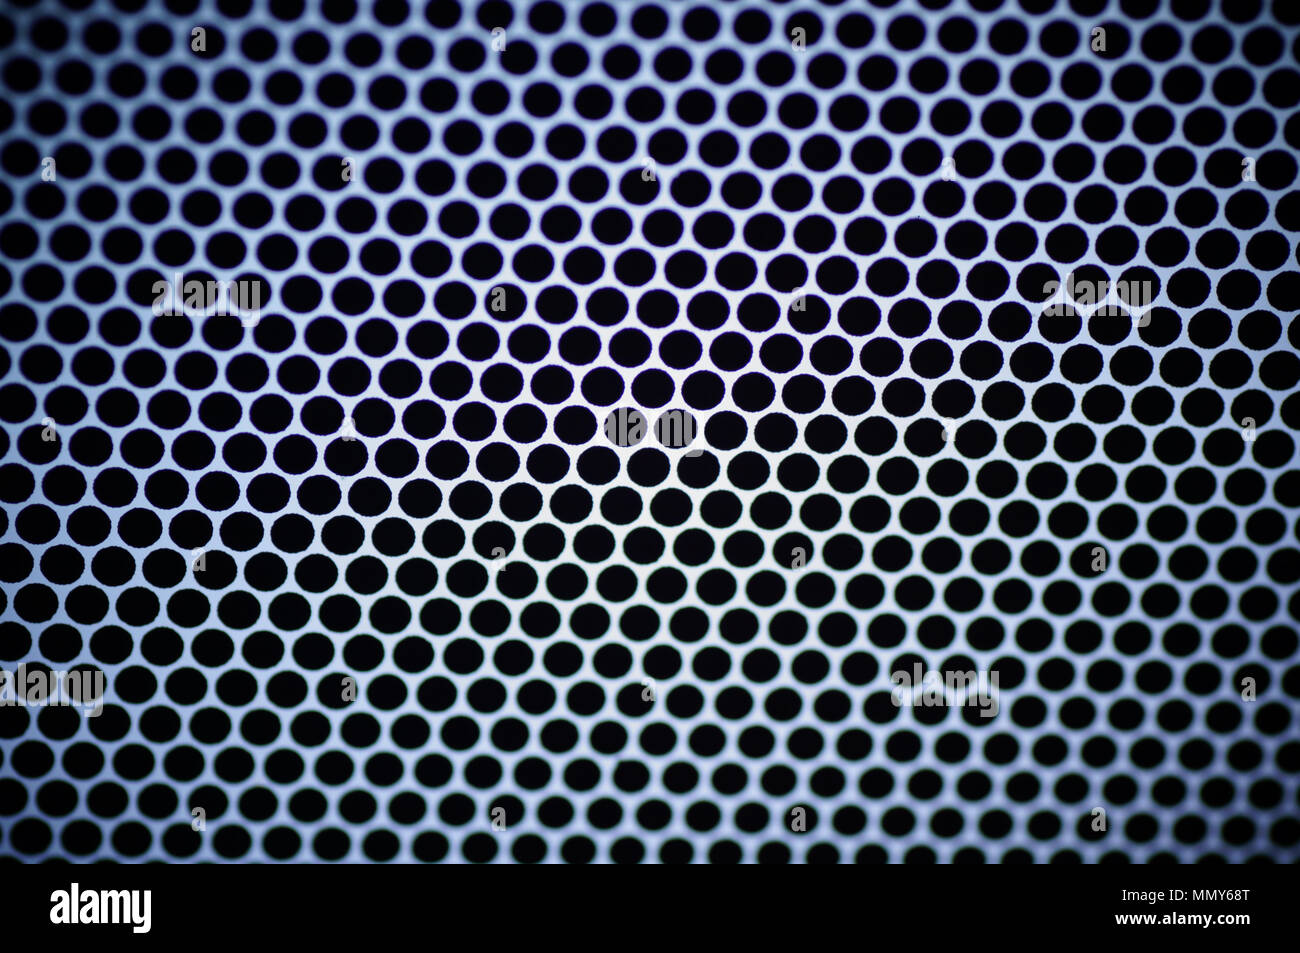 Celda hexagonal, Honeycomb, textura de fondo de la rejilla del altavoz  Fotografía de stock - Alamy